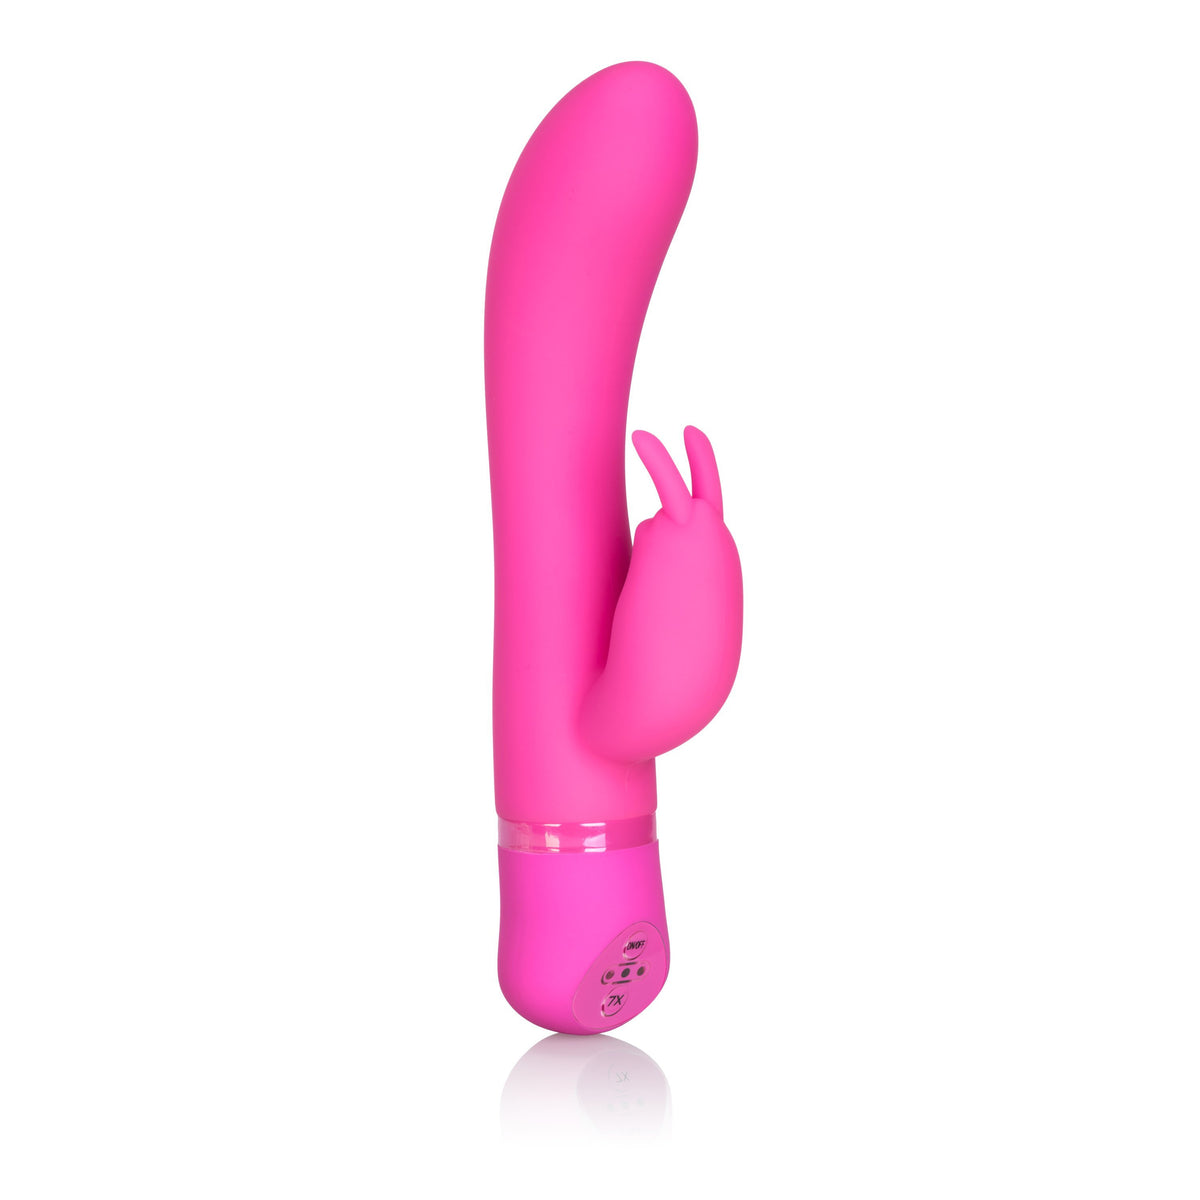 California Exotics - Spellbound Bunny Vibrator (Pink) | CherryAffairs Singapore